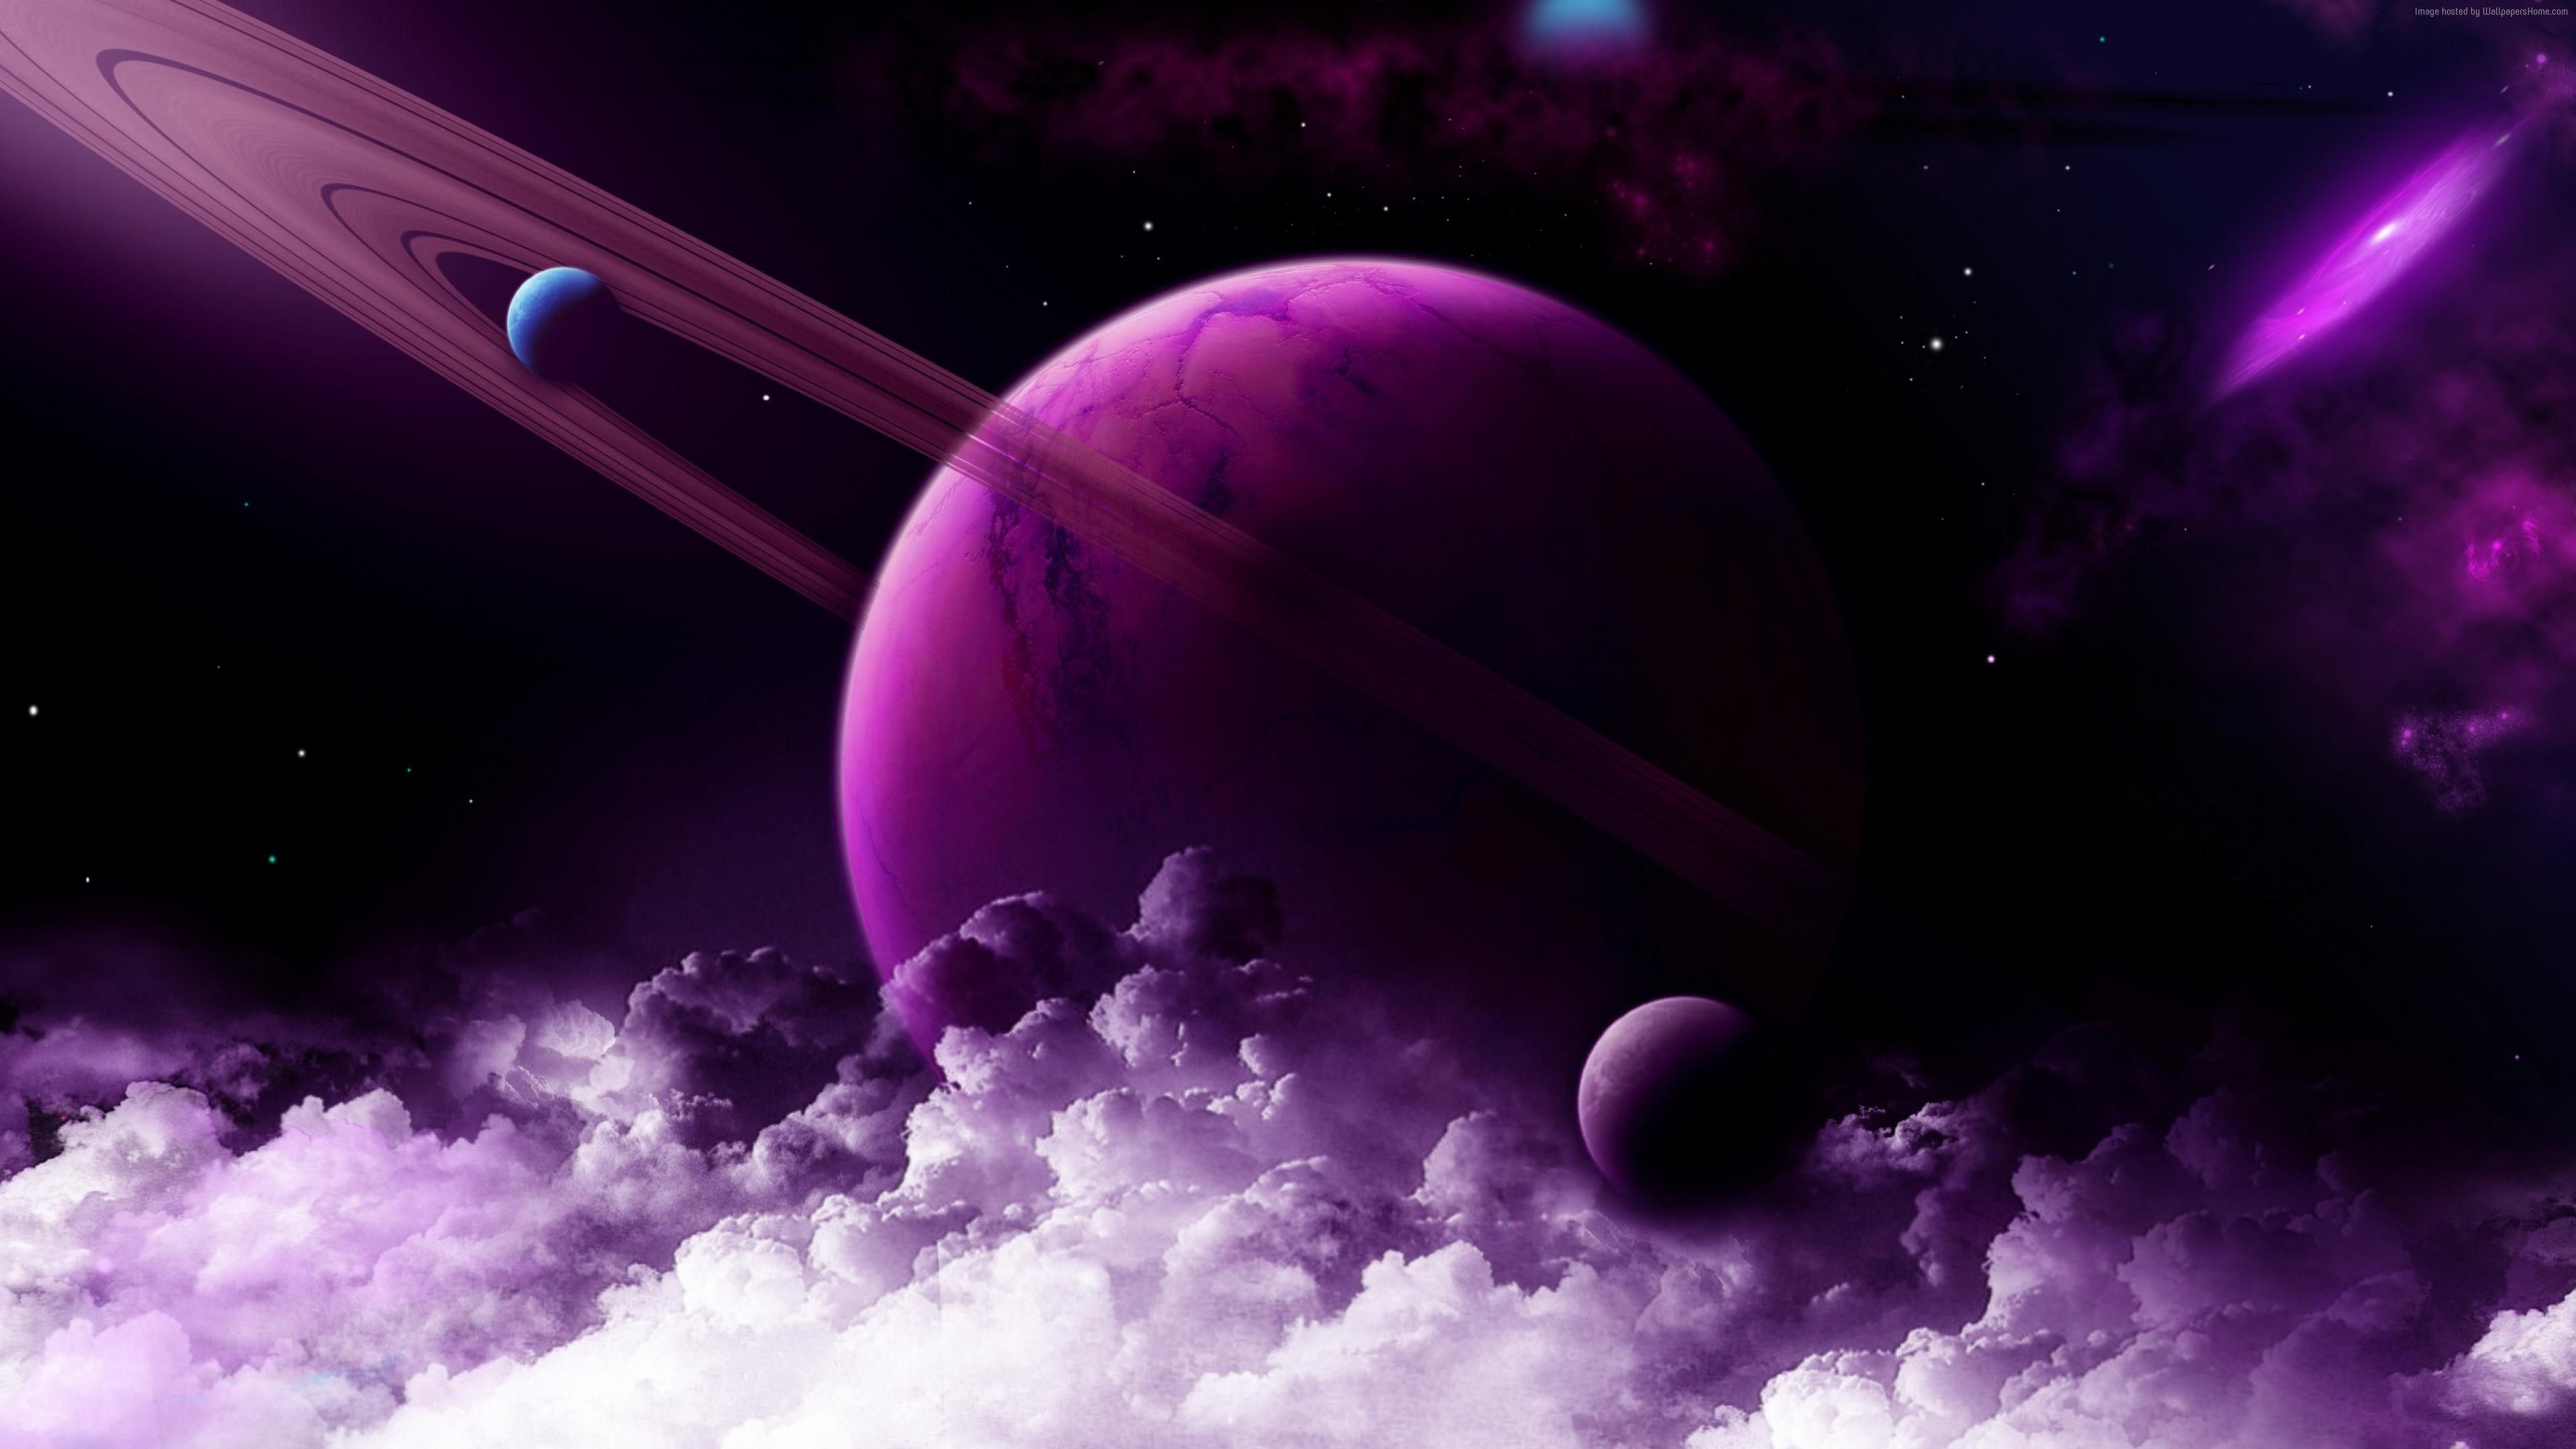 Wallpaper Saturn, Planet, Purple, 4k, Space Space Wallpaper Saturn Planet Purple 4k Space 4k, Pl. Saturn, Planets, Saturn Planet